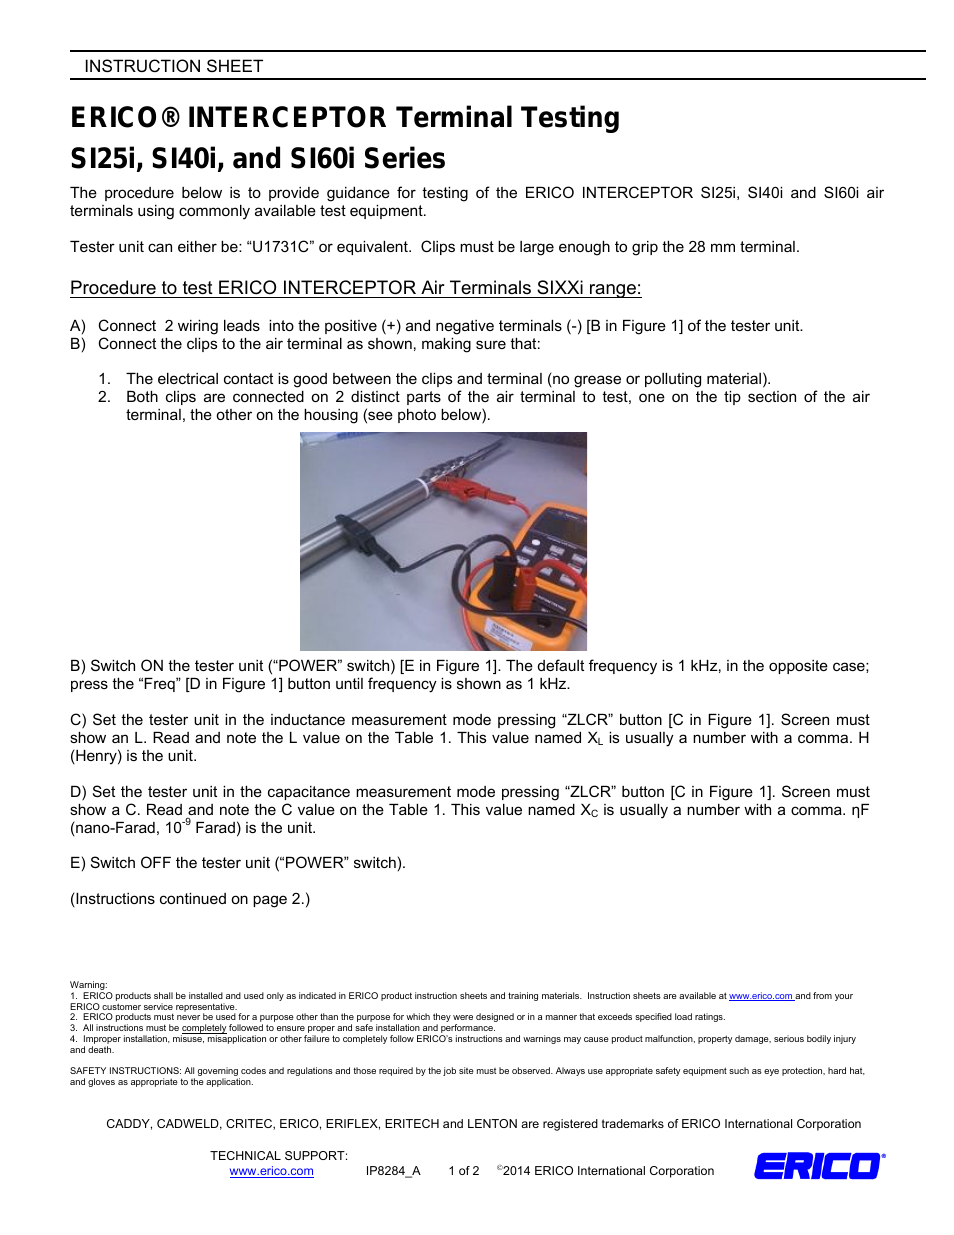 SI40i Series ERICO INTERCEPTOR Terminal Testing